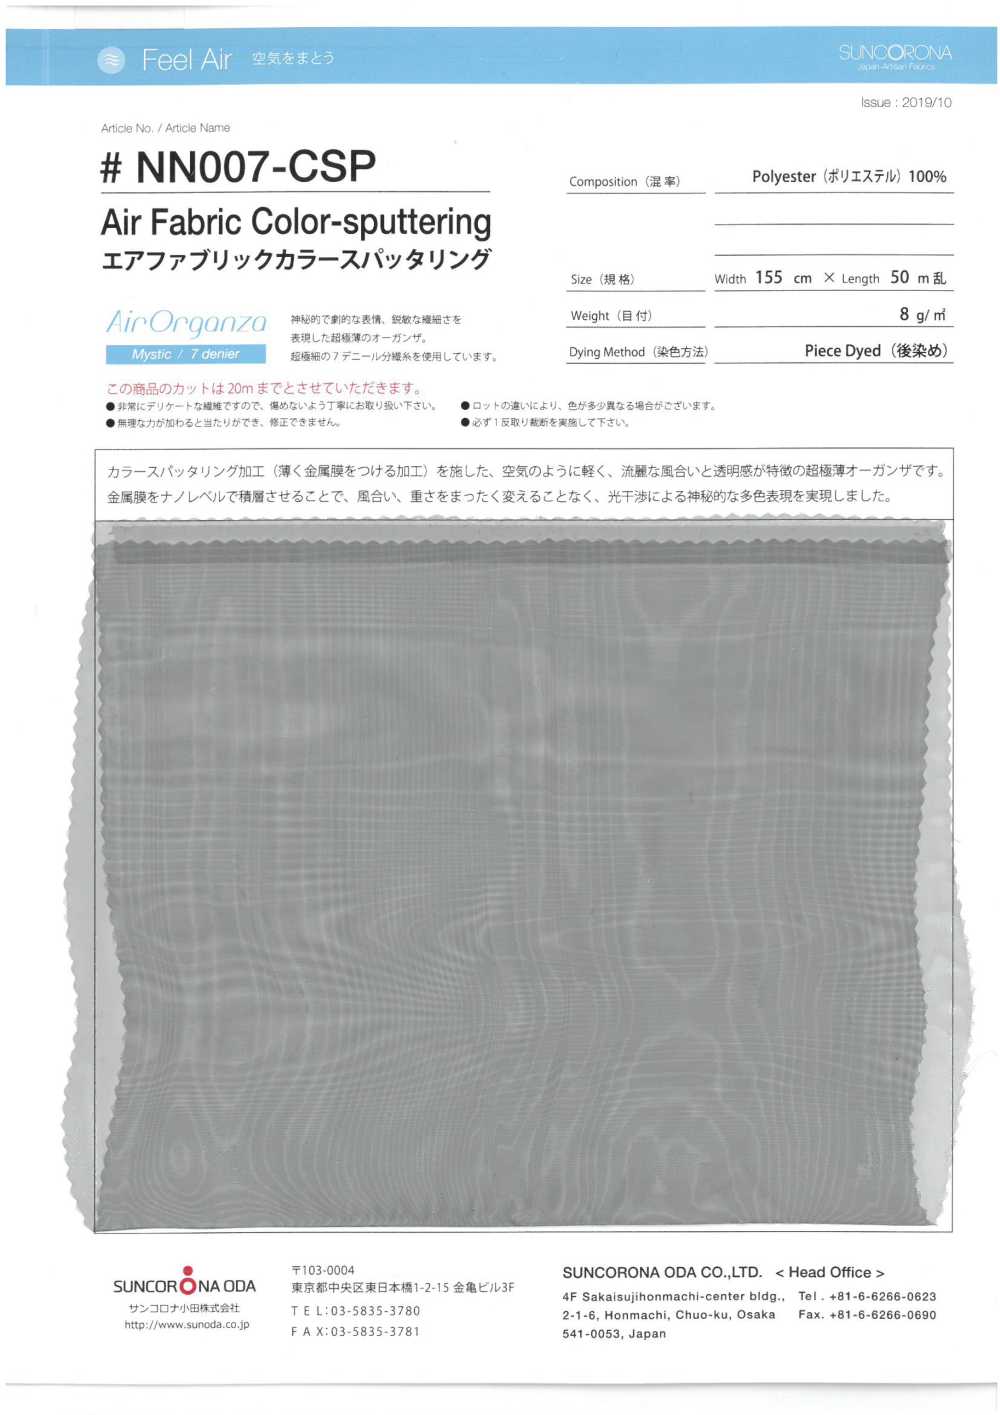 NN007-CSP Air Fabric Color Sputtering[Textile / Fabric] Suncorona Oda